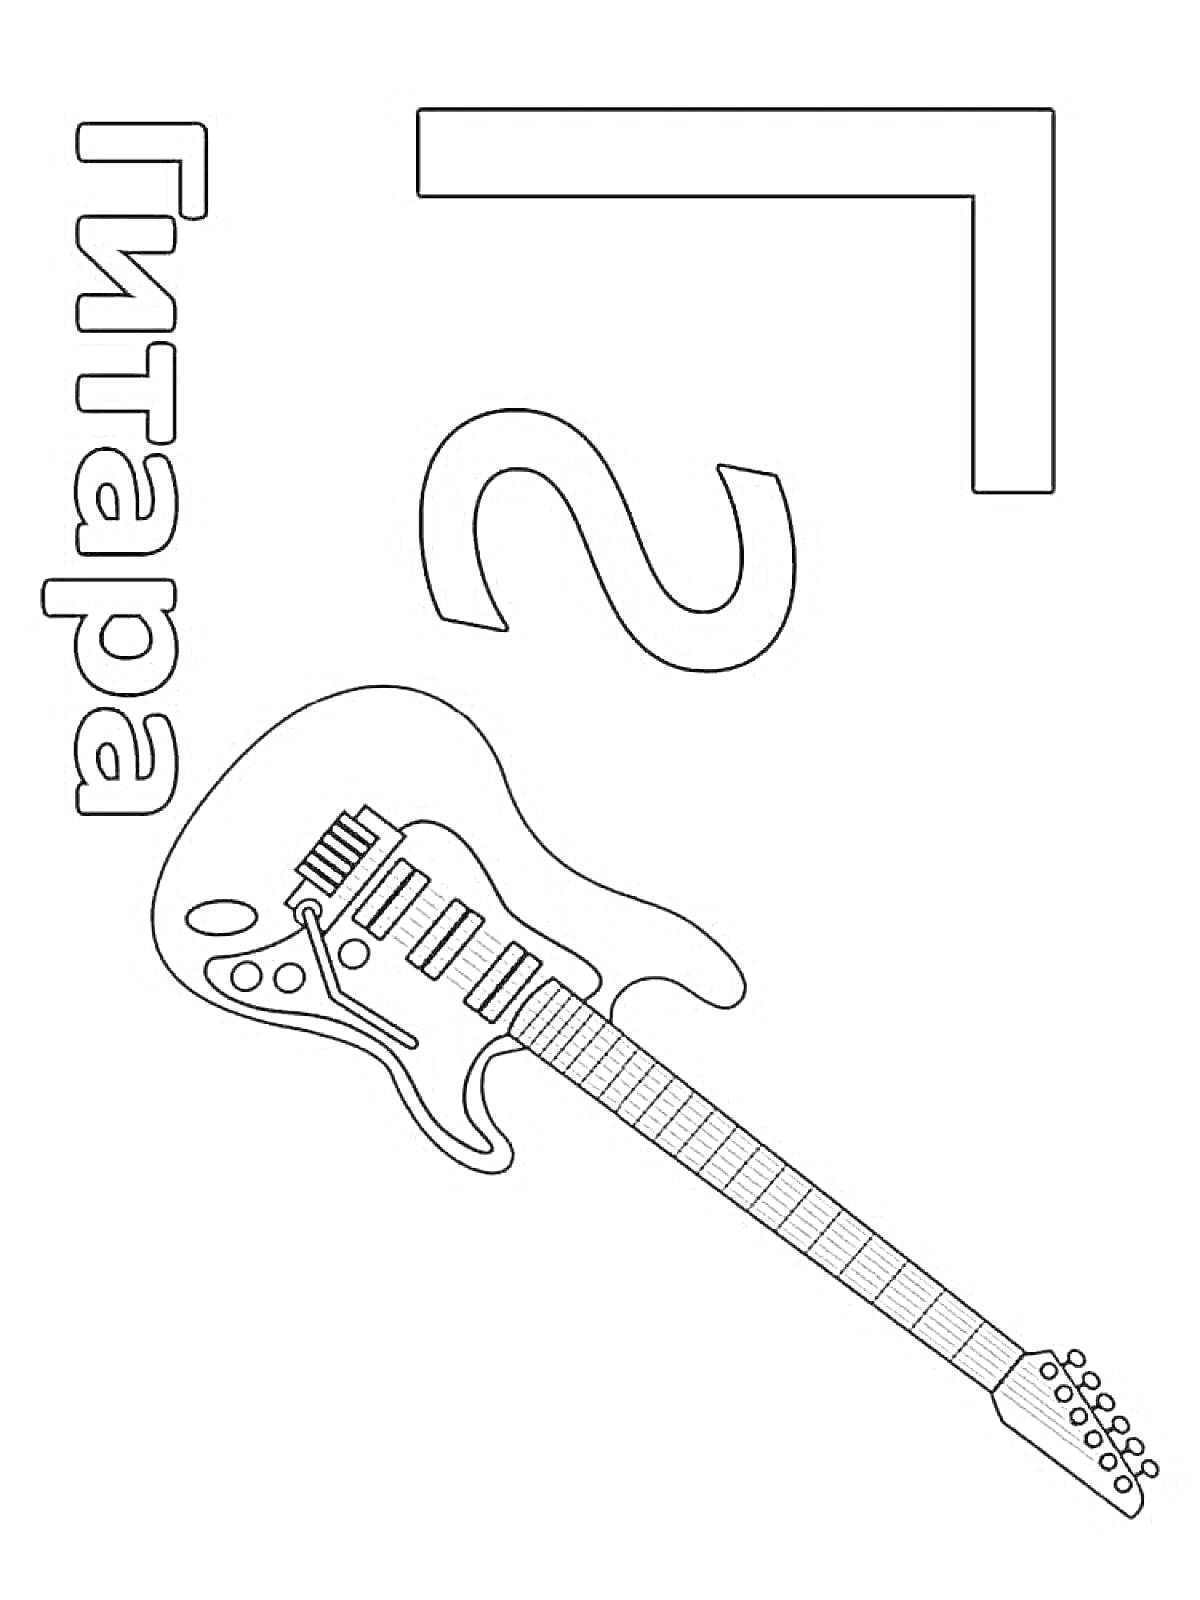 Раскраска Гитара, буква Г, контур гитары, контур буквы Г, большая буква Г